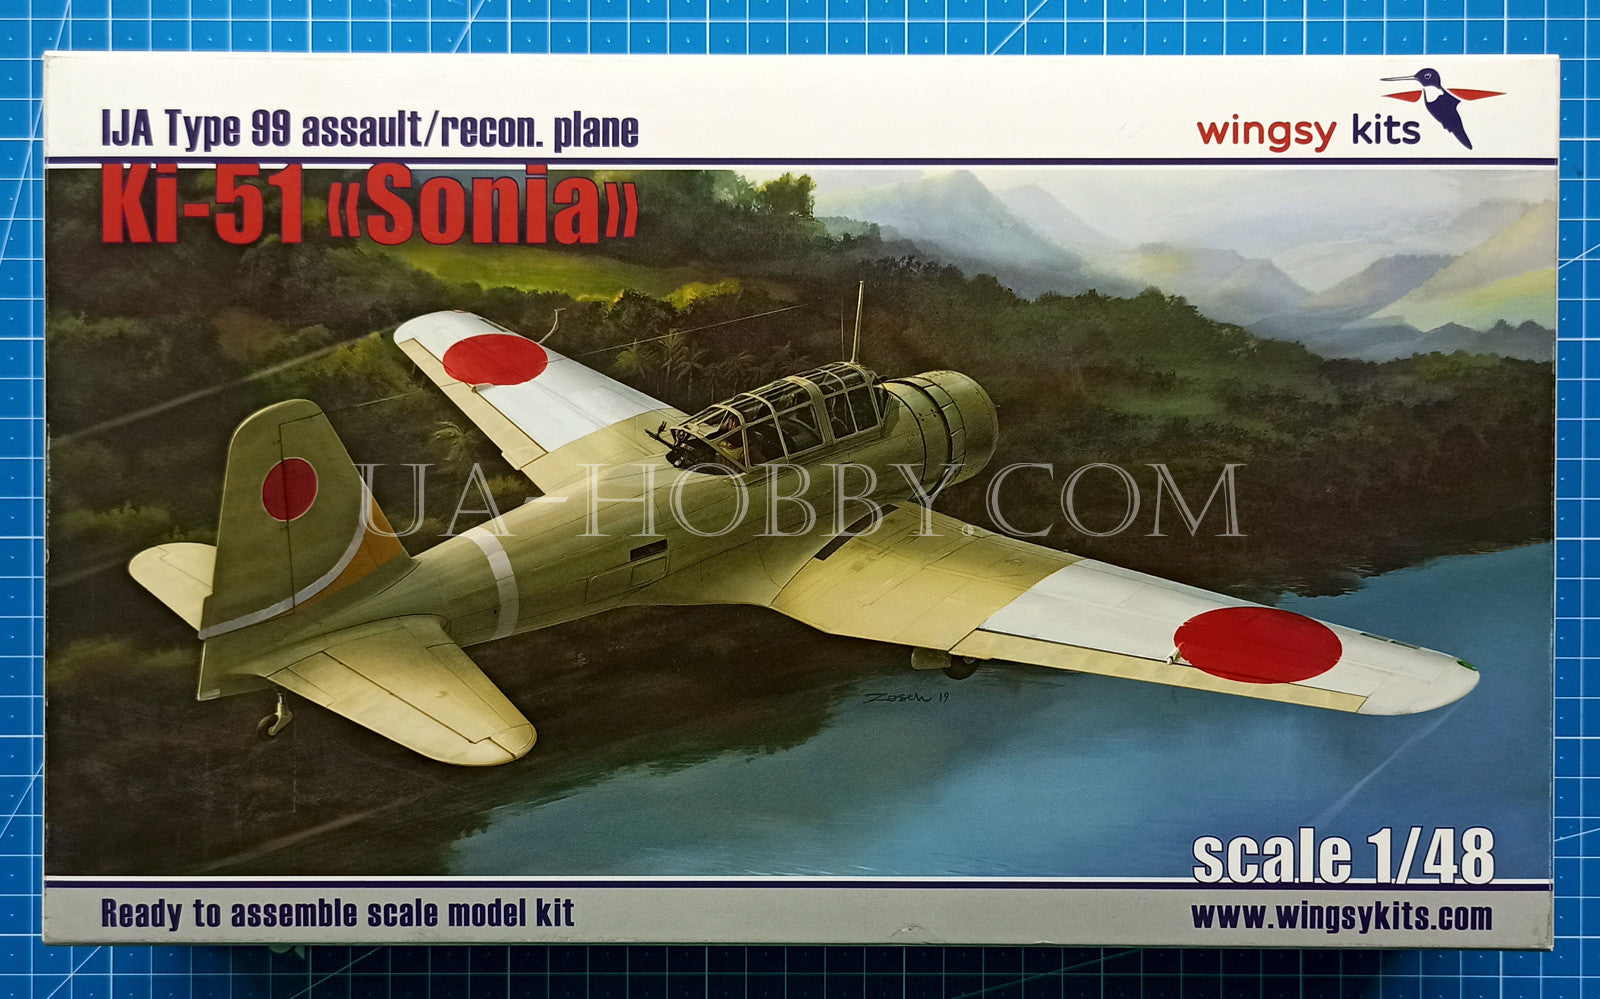 1/48 IJA Type 99 assault/recon. plane Ki-51 "Sonia". Wingsy Kits D5-05